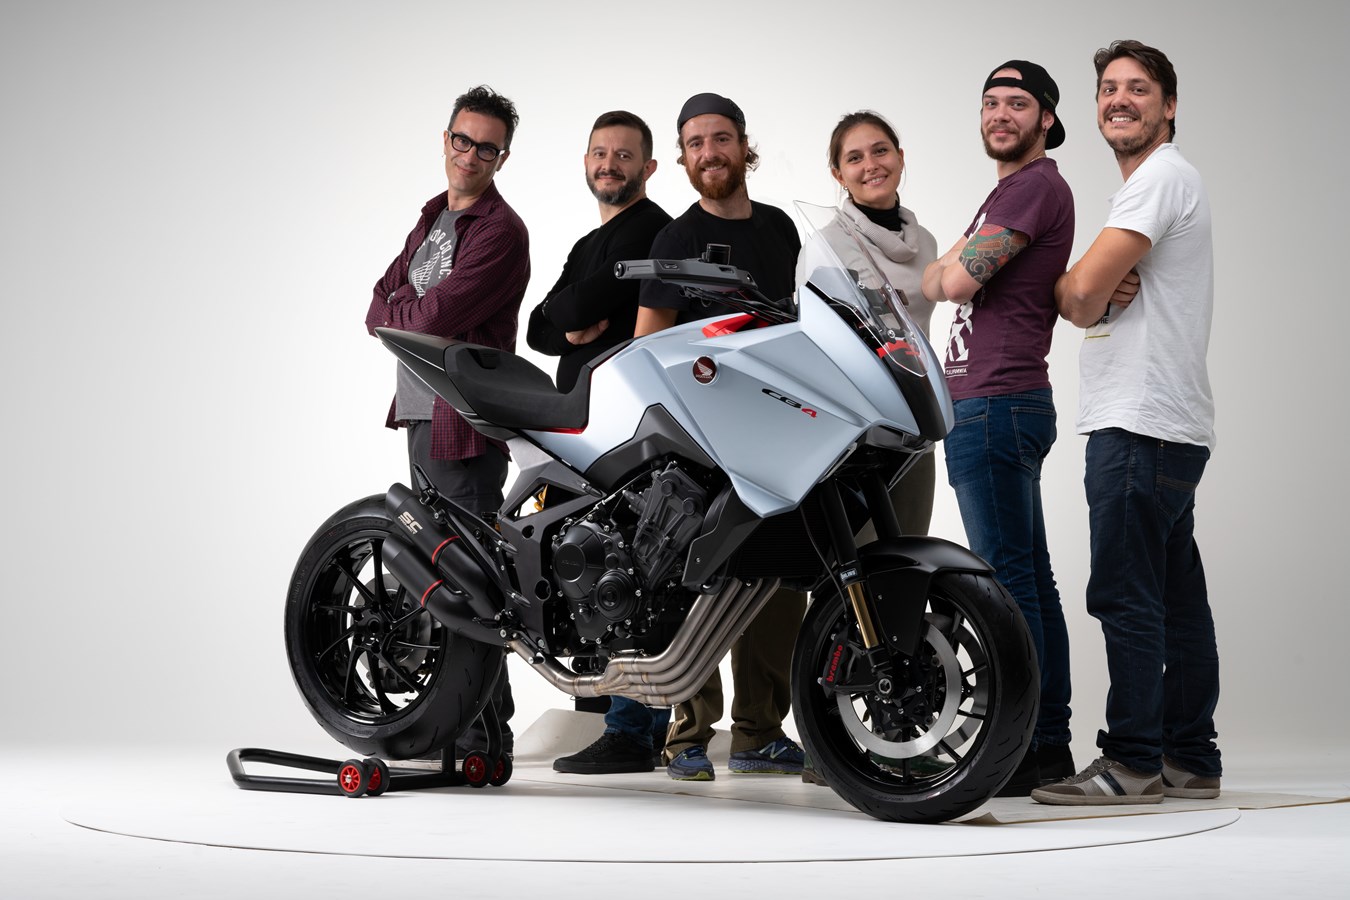 Honda CB4 X Concept: “Enjoy 7 days a week with fun”